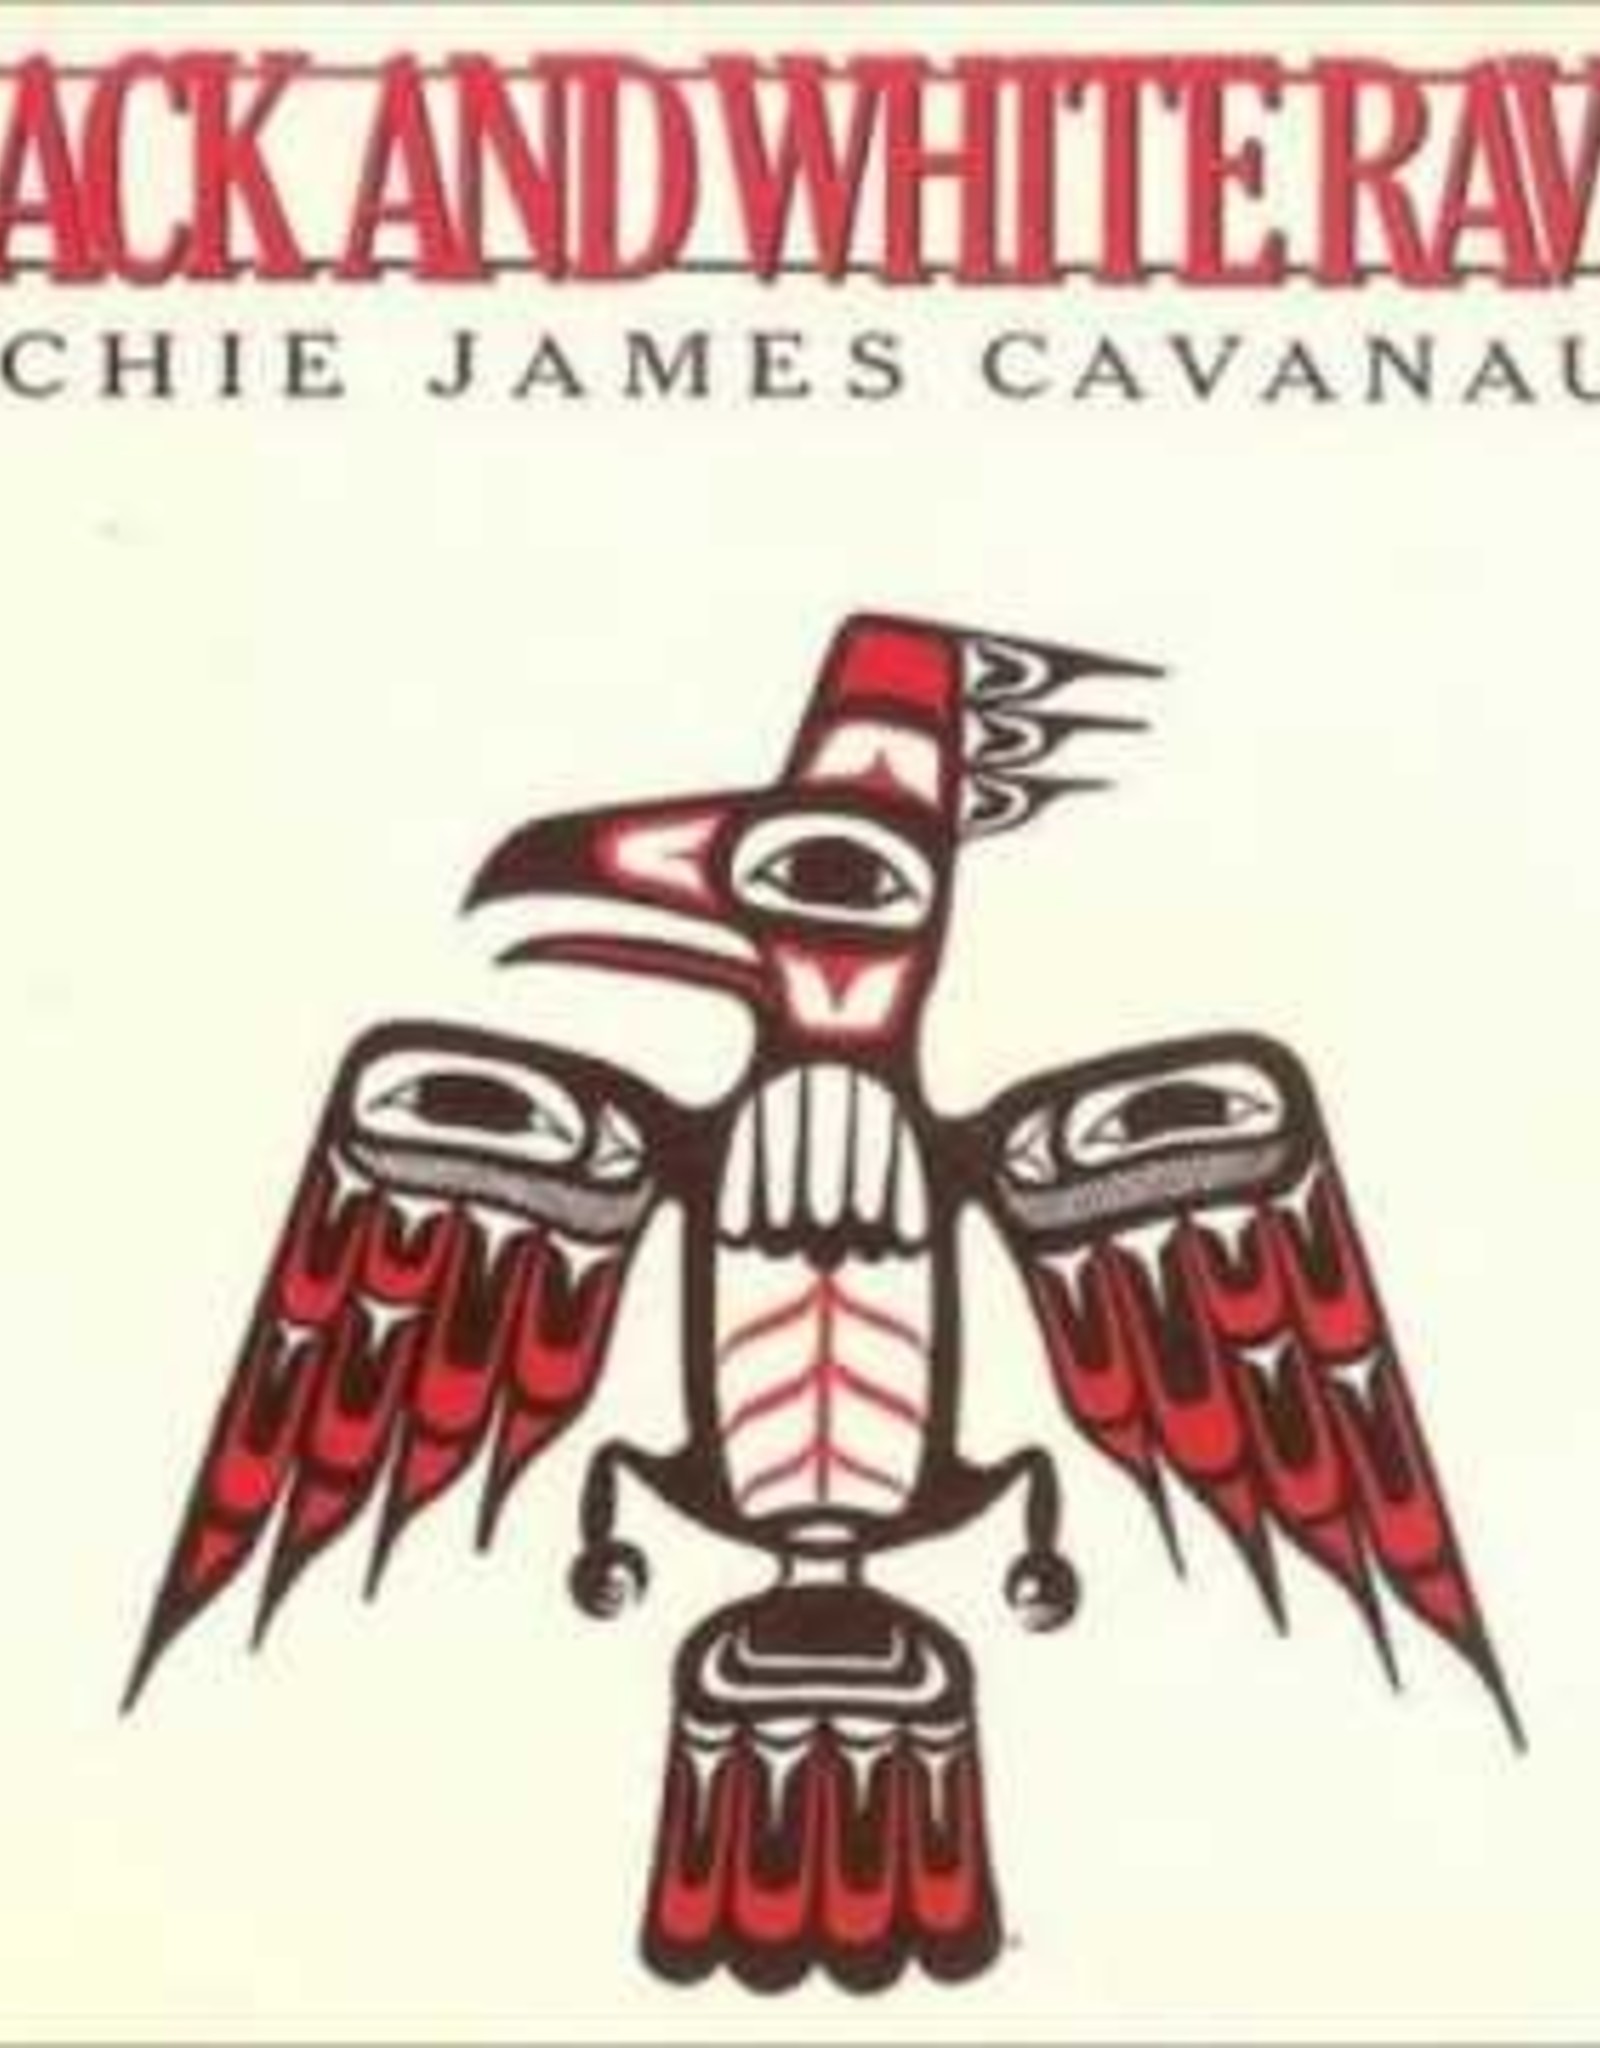 Archie James Cavanaugh - Black and White Raven